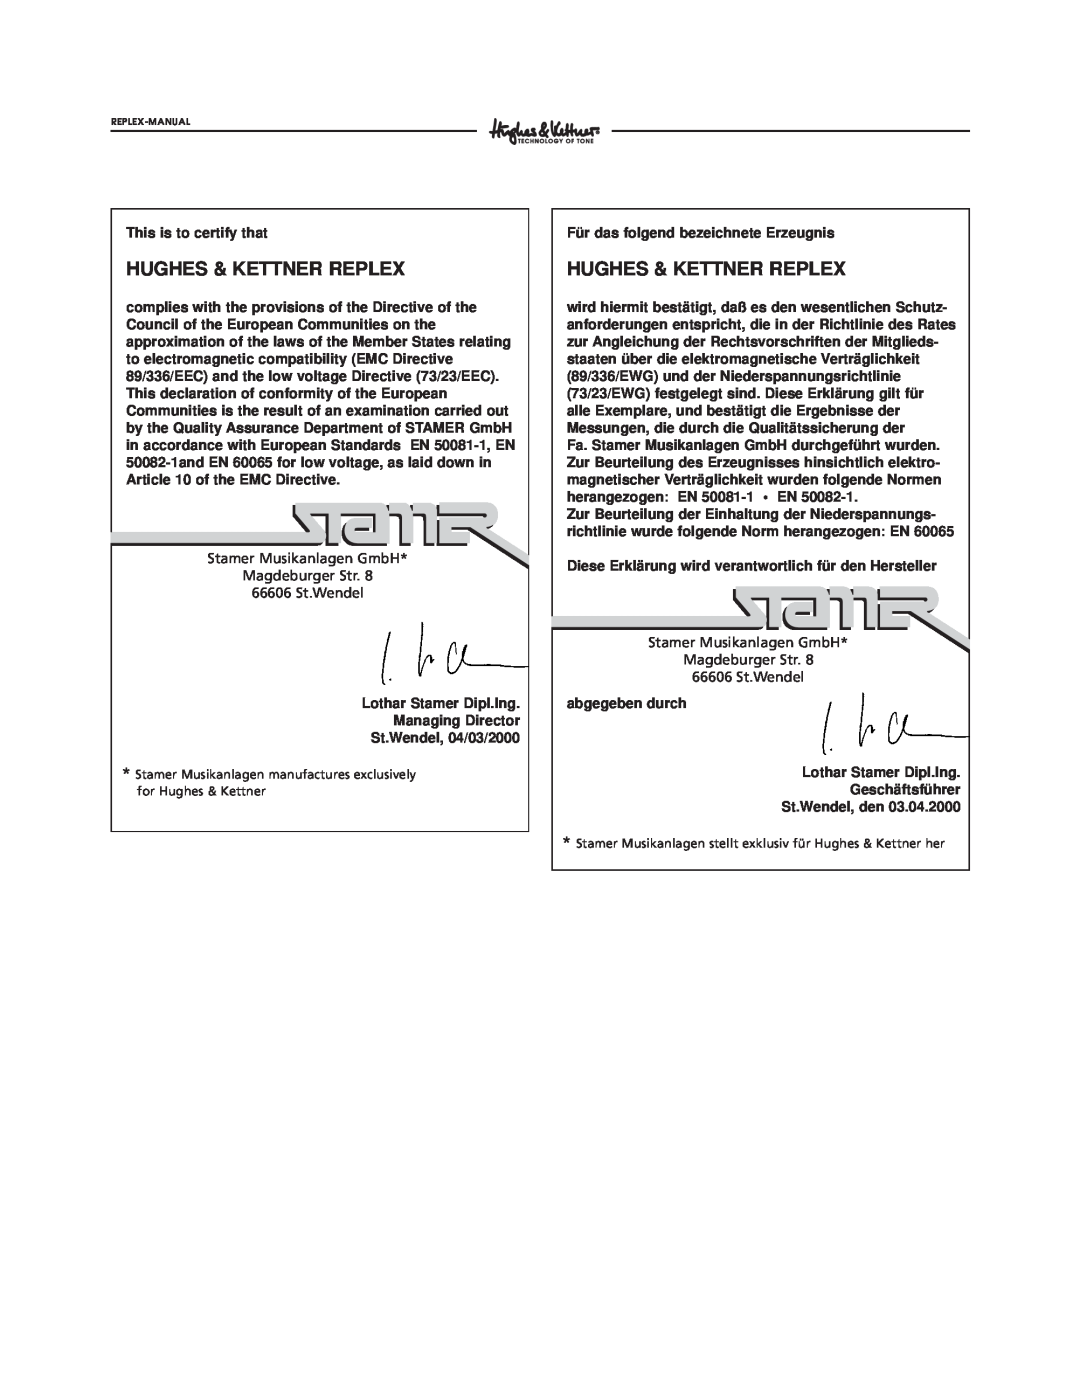 Hughes & Kettner Tape Delay Simulator manual Hughes & Kettner Replex, This is to certify that, St.Wendel, 04/03/2000 